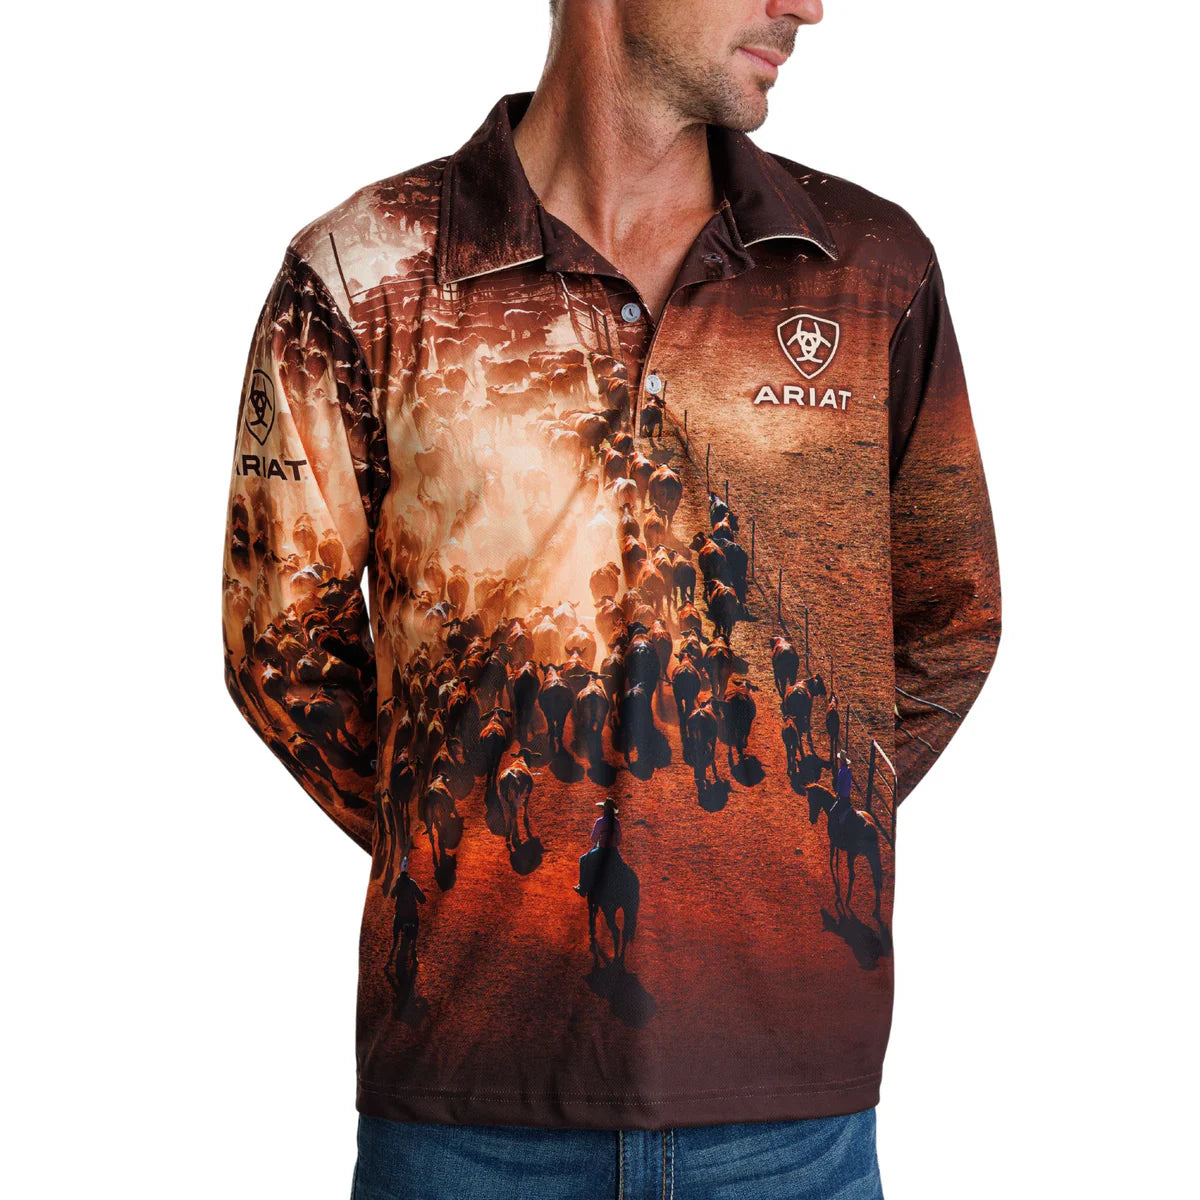 Ariat Fishing Shirt (Cattle Muster)